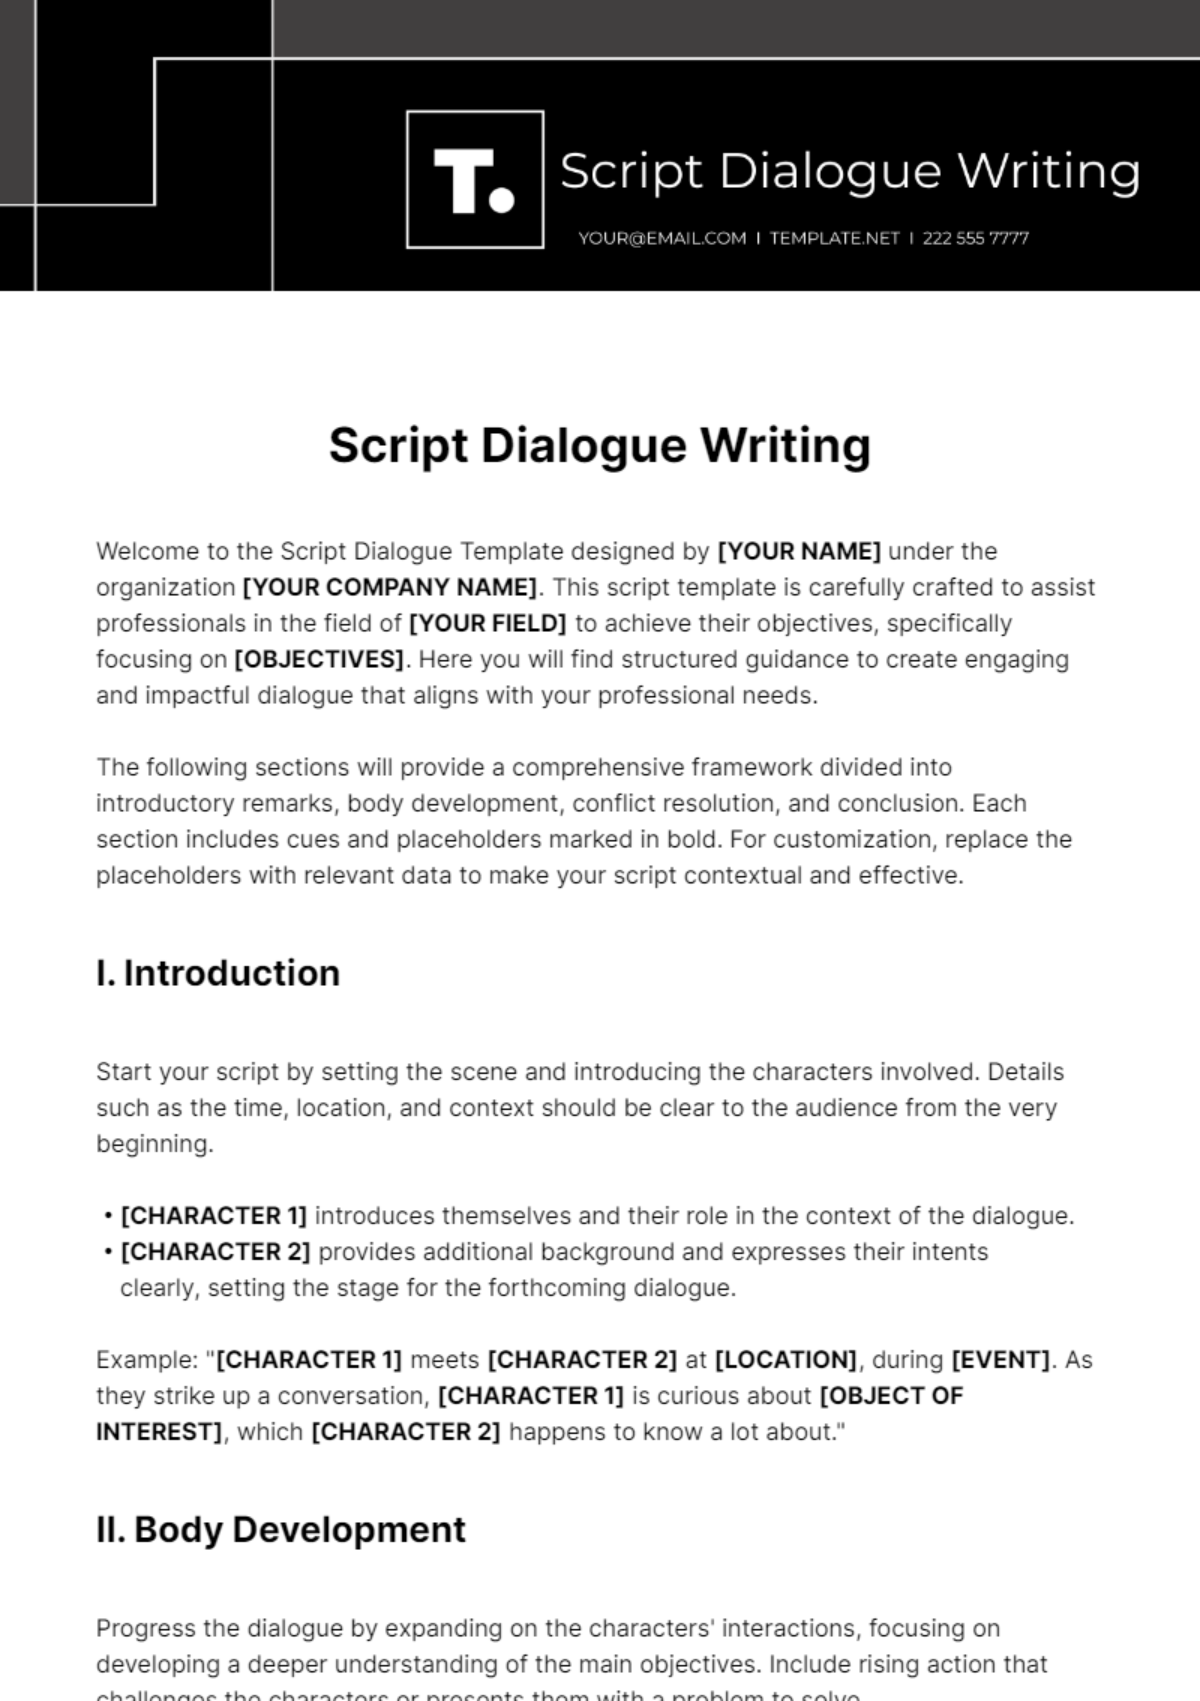 Free Script Dialogue Writing Template